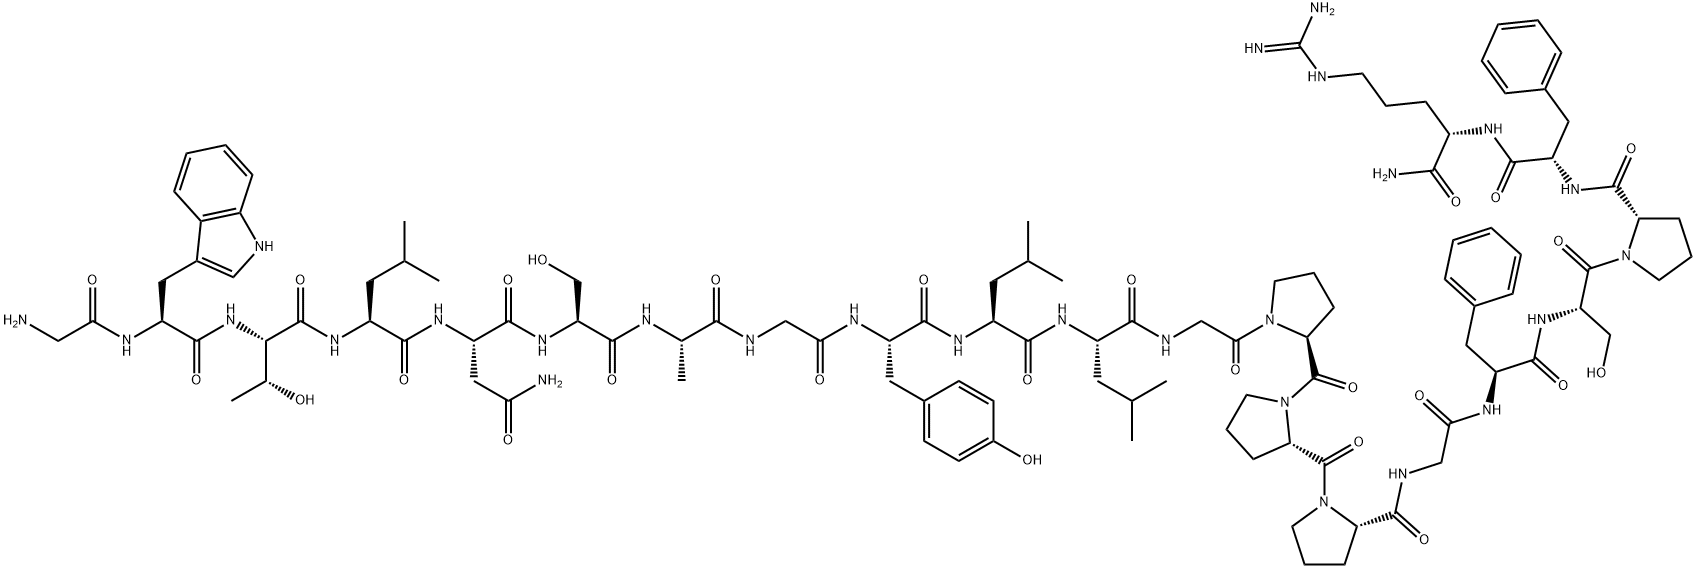 M35|GALANIN (1-13) - BRADYKININ (2-9) AMIDE